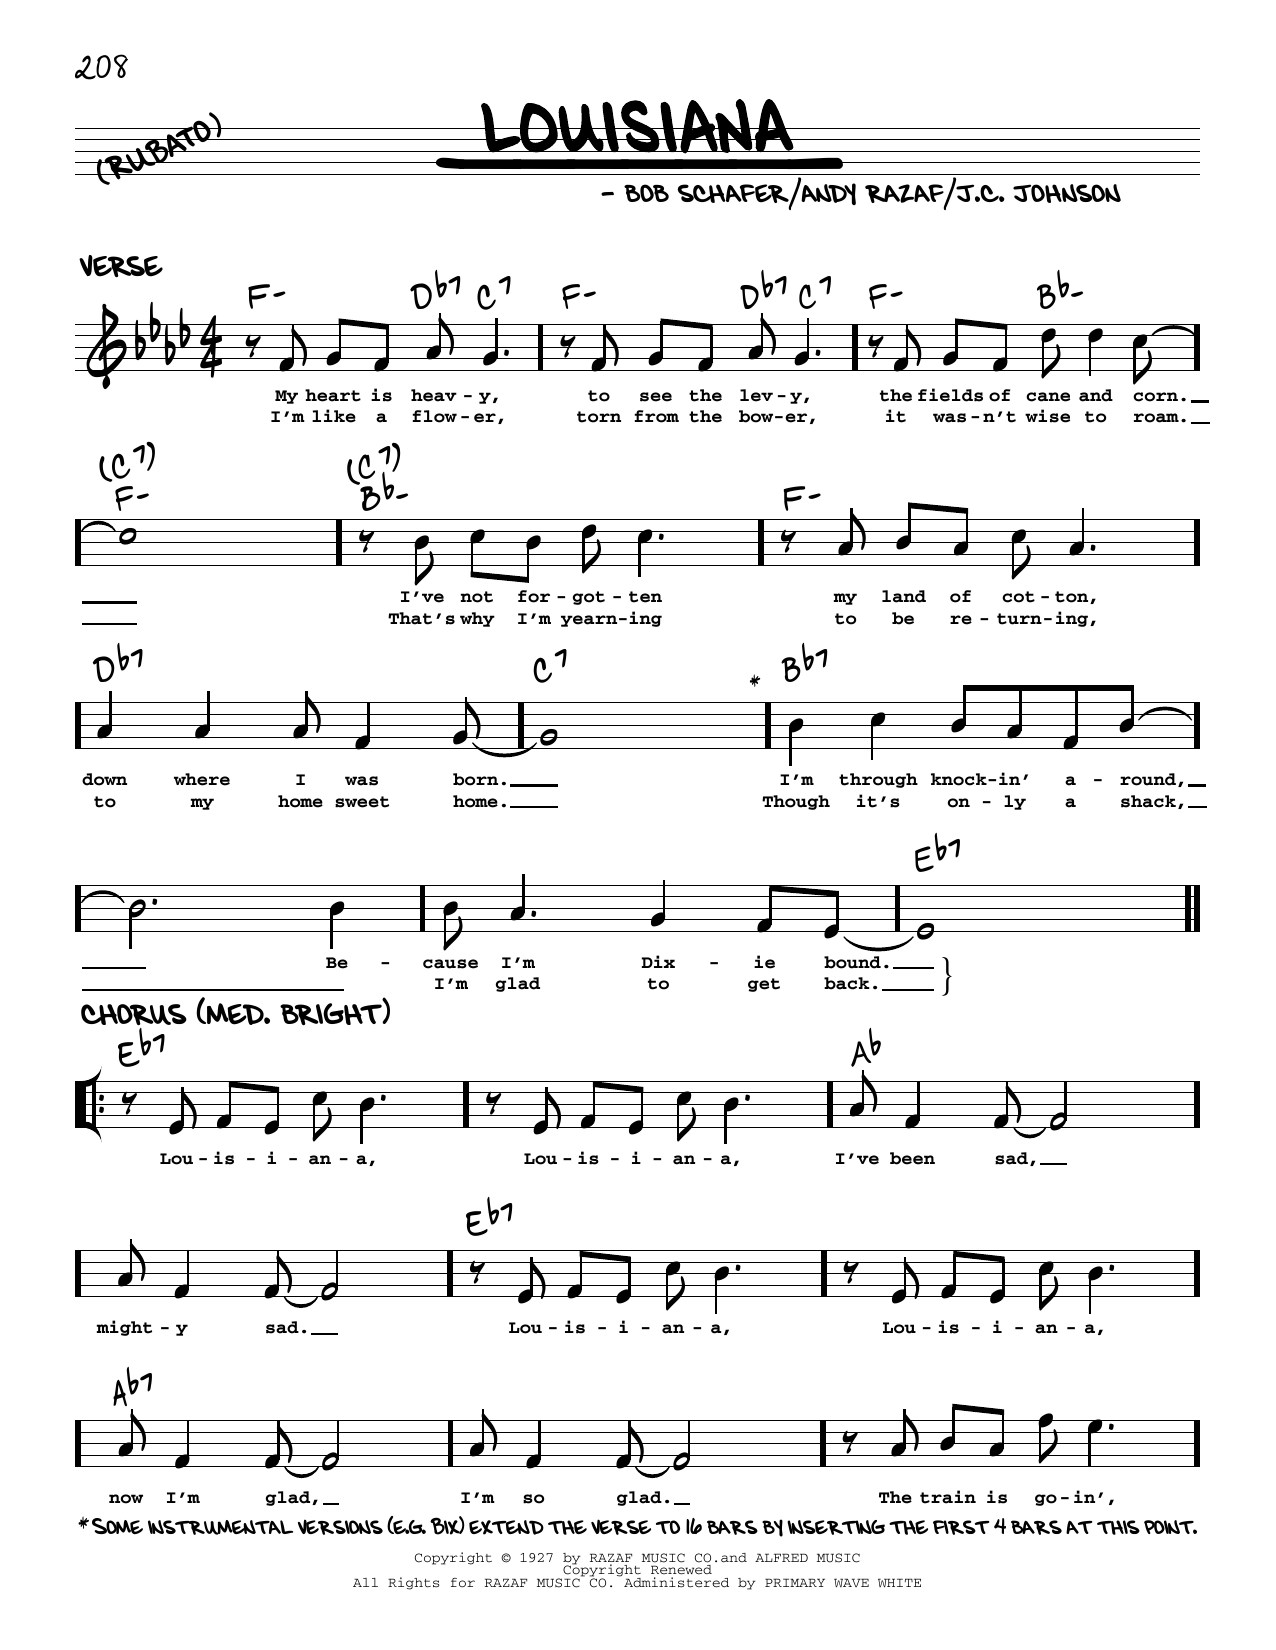 Paul Whiteman & His Orchestra Louisiana (arr. Robert Rawlins) Sheet Music Notes & Chords for Real Book – Melody, Lyrics & Chords - Download or Print PDF